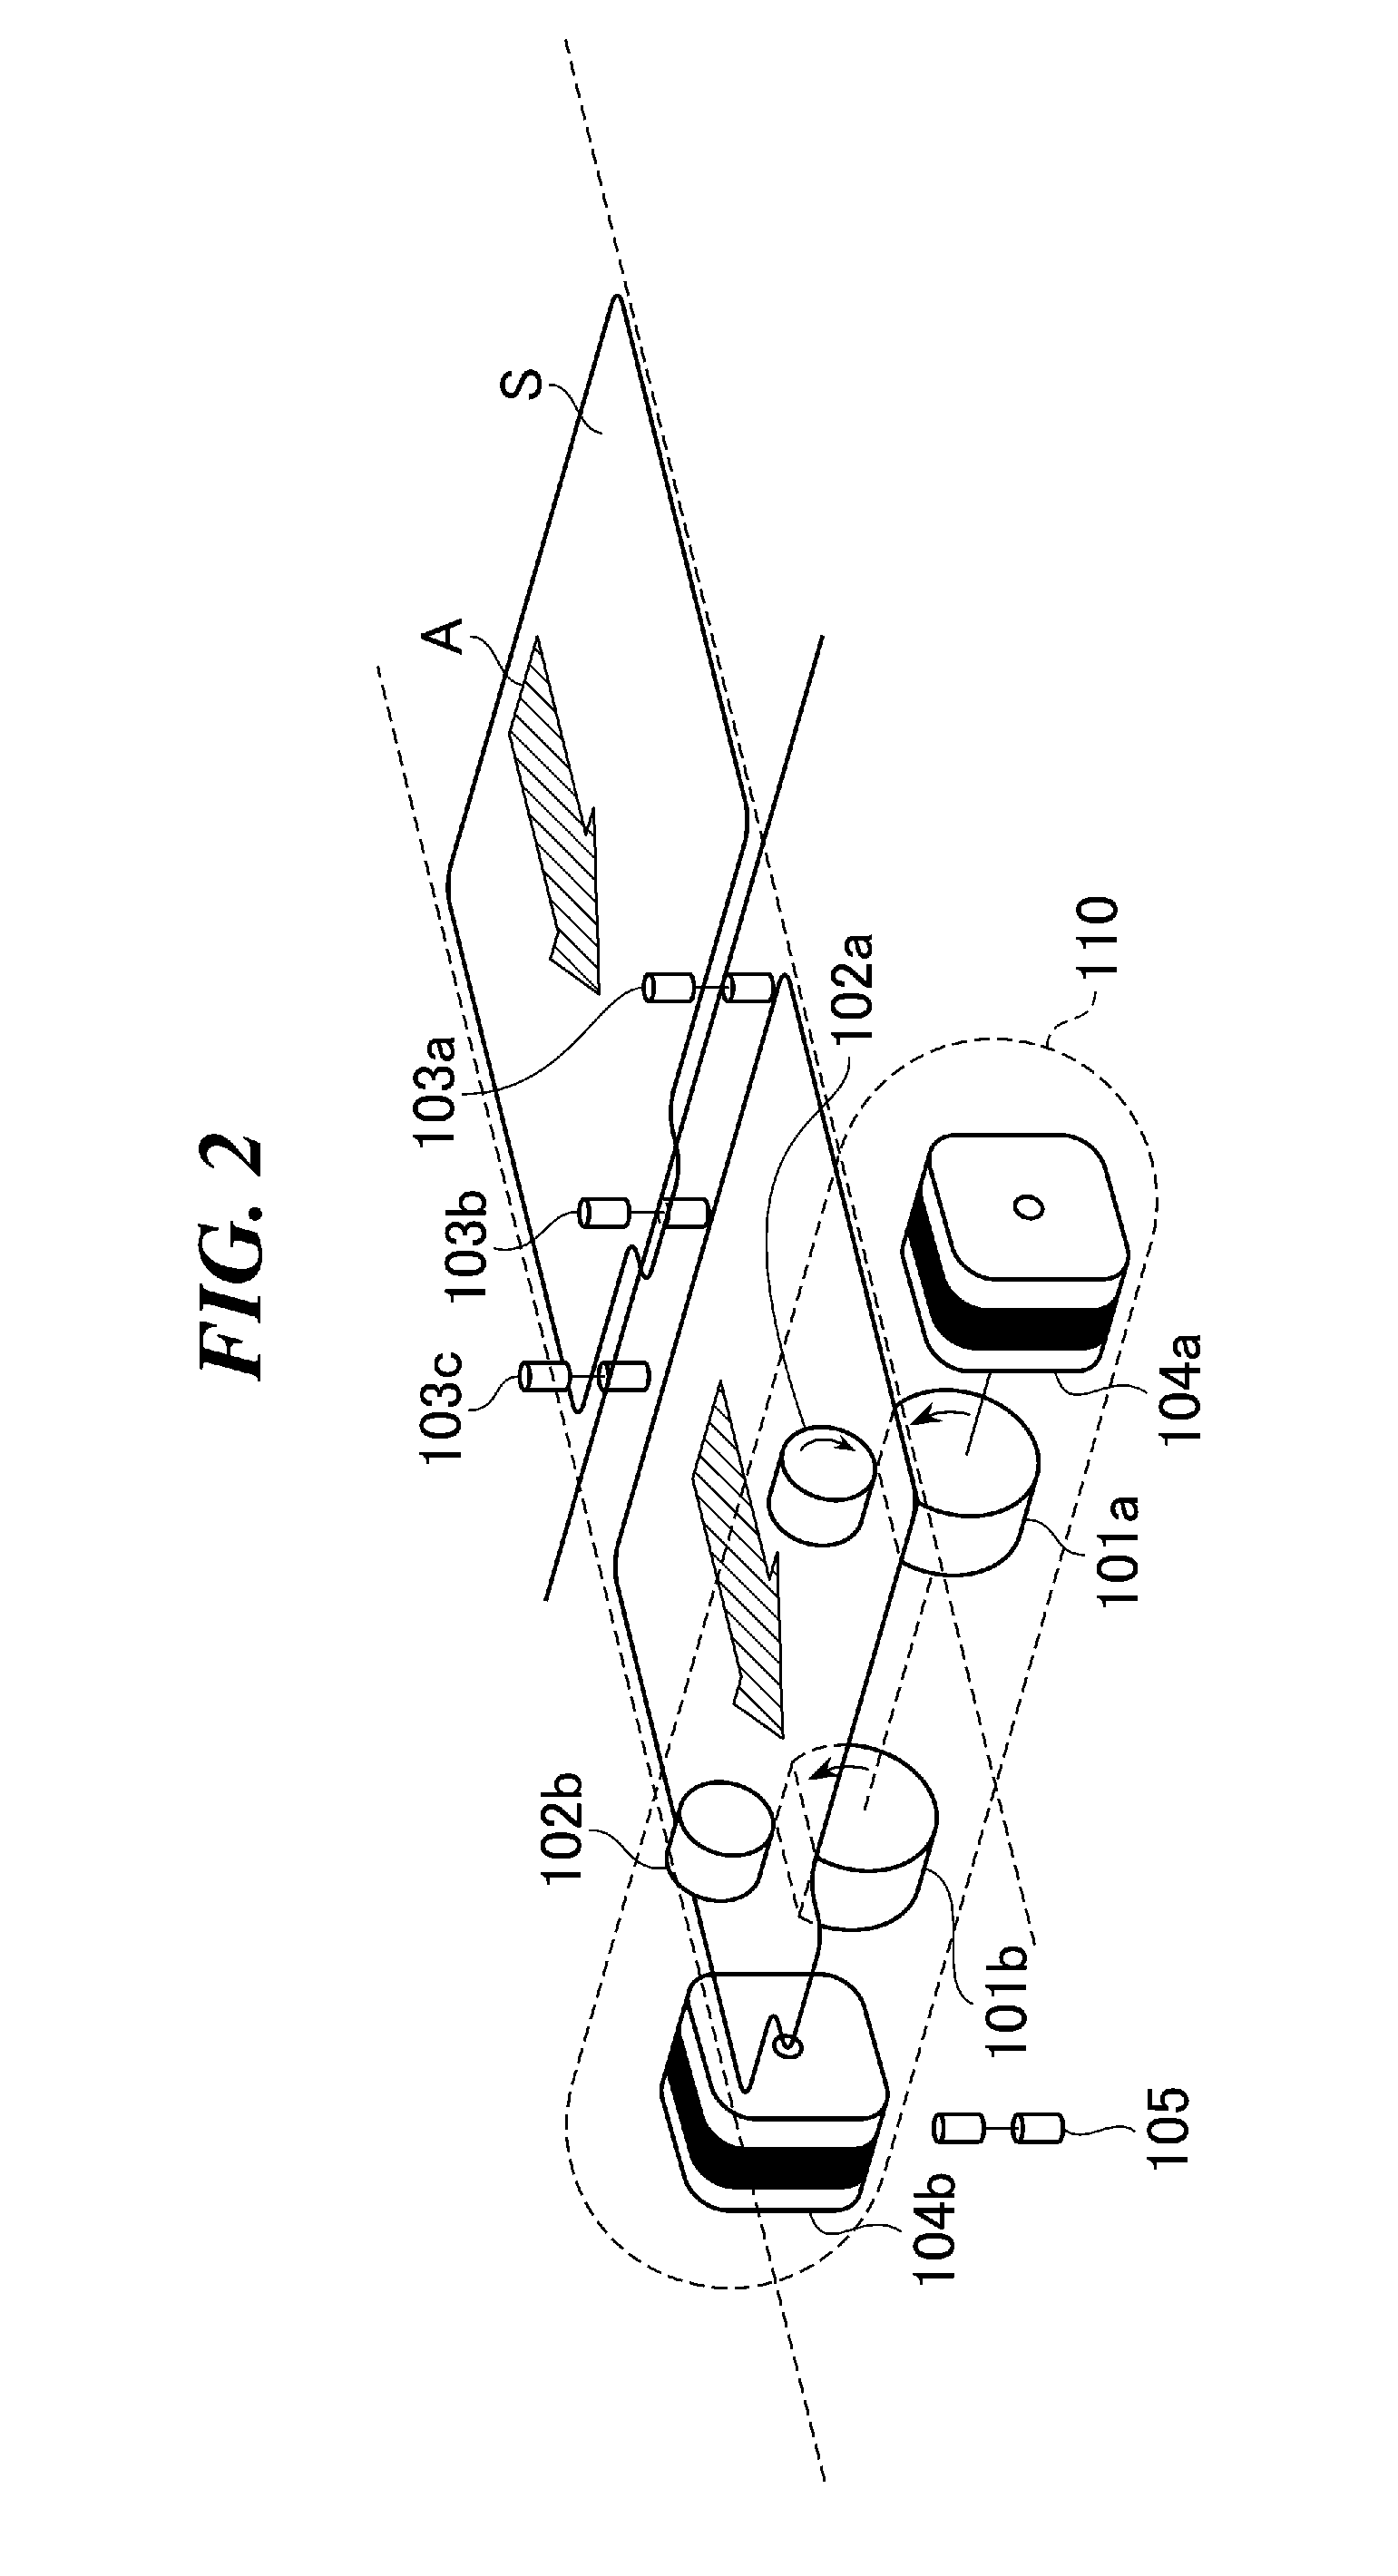 Sheet conveyance device, image reading apparatus and image forming apparatus using sheet conveyance device